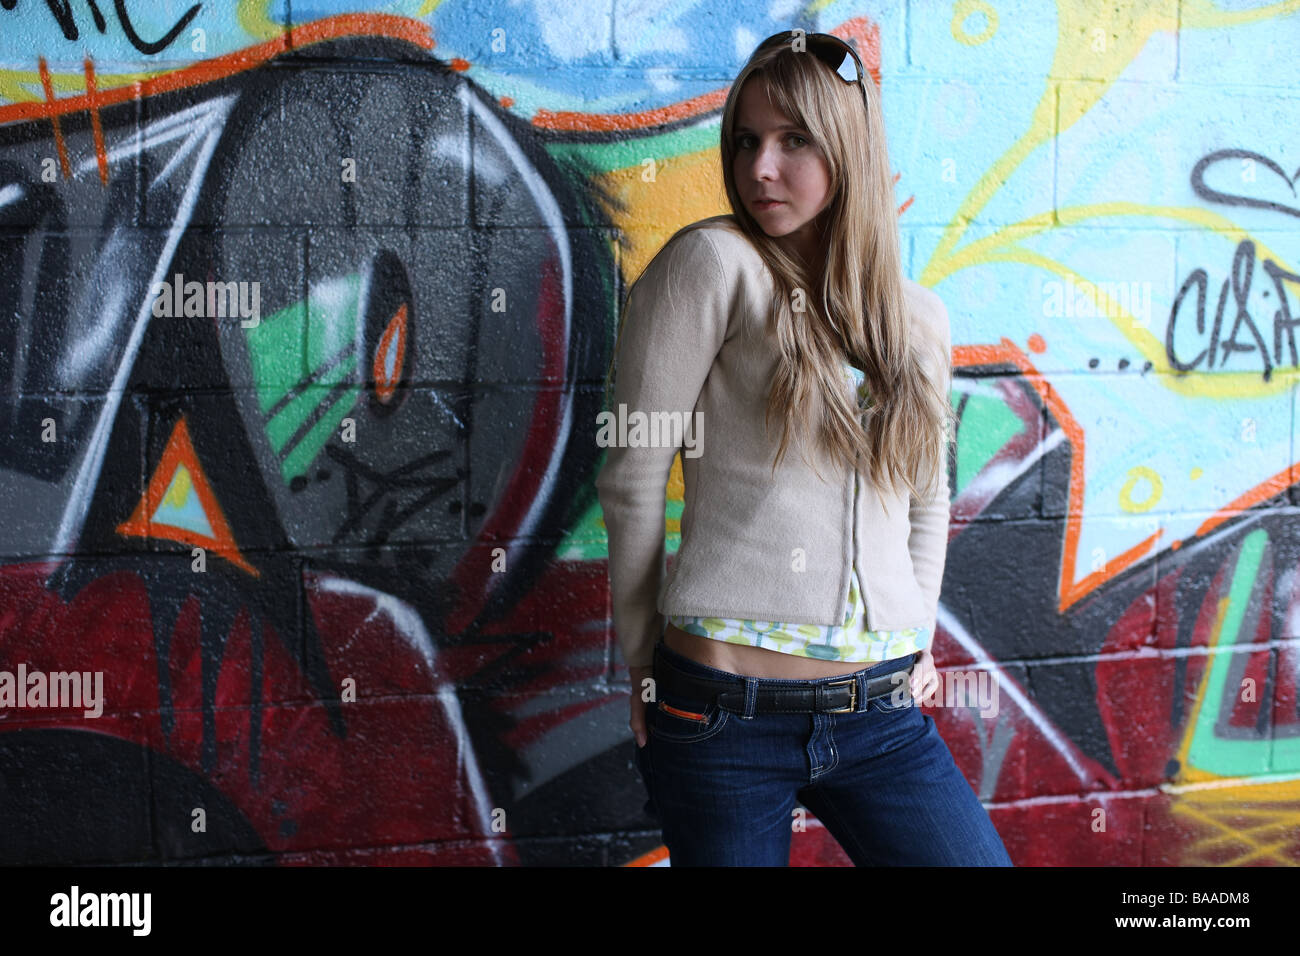 three quarter length shot of girl up against a graffiti sprayed wall Stock Photo